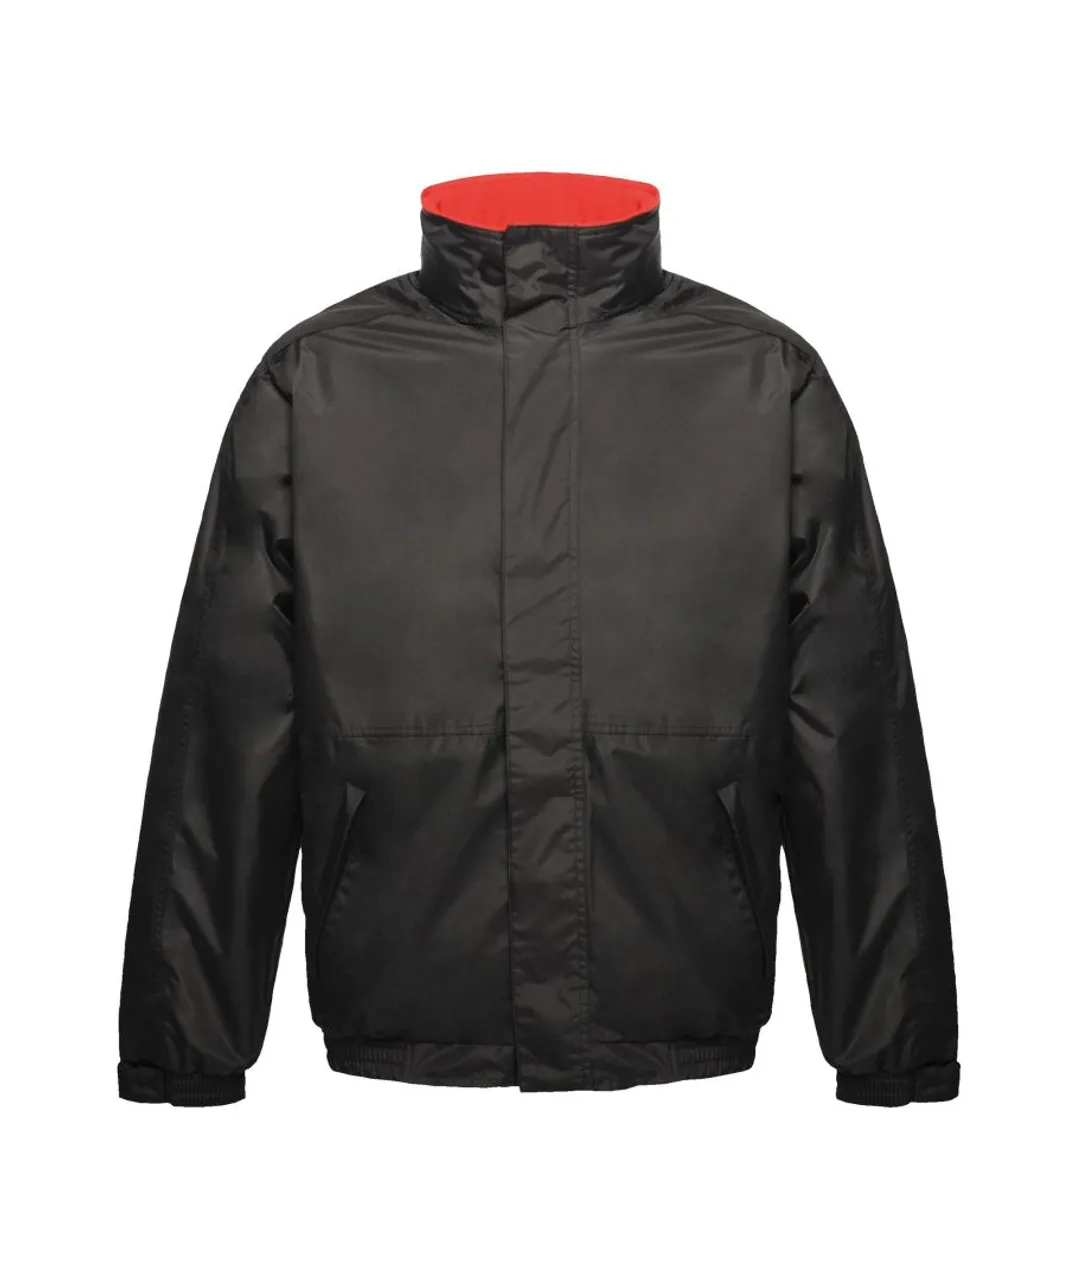 Regatta Mens Dover Waterproof Windproof Jacket (Black/Red) - Black/White